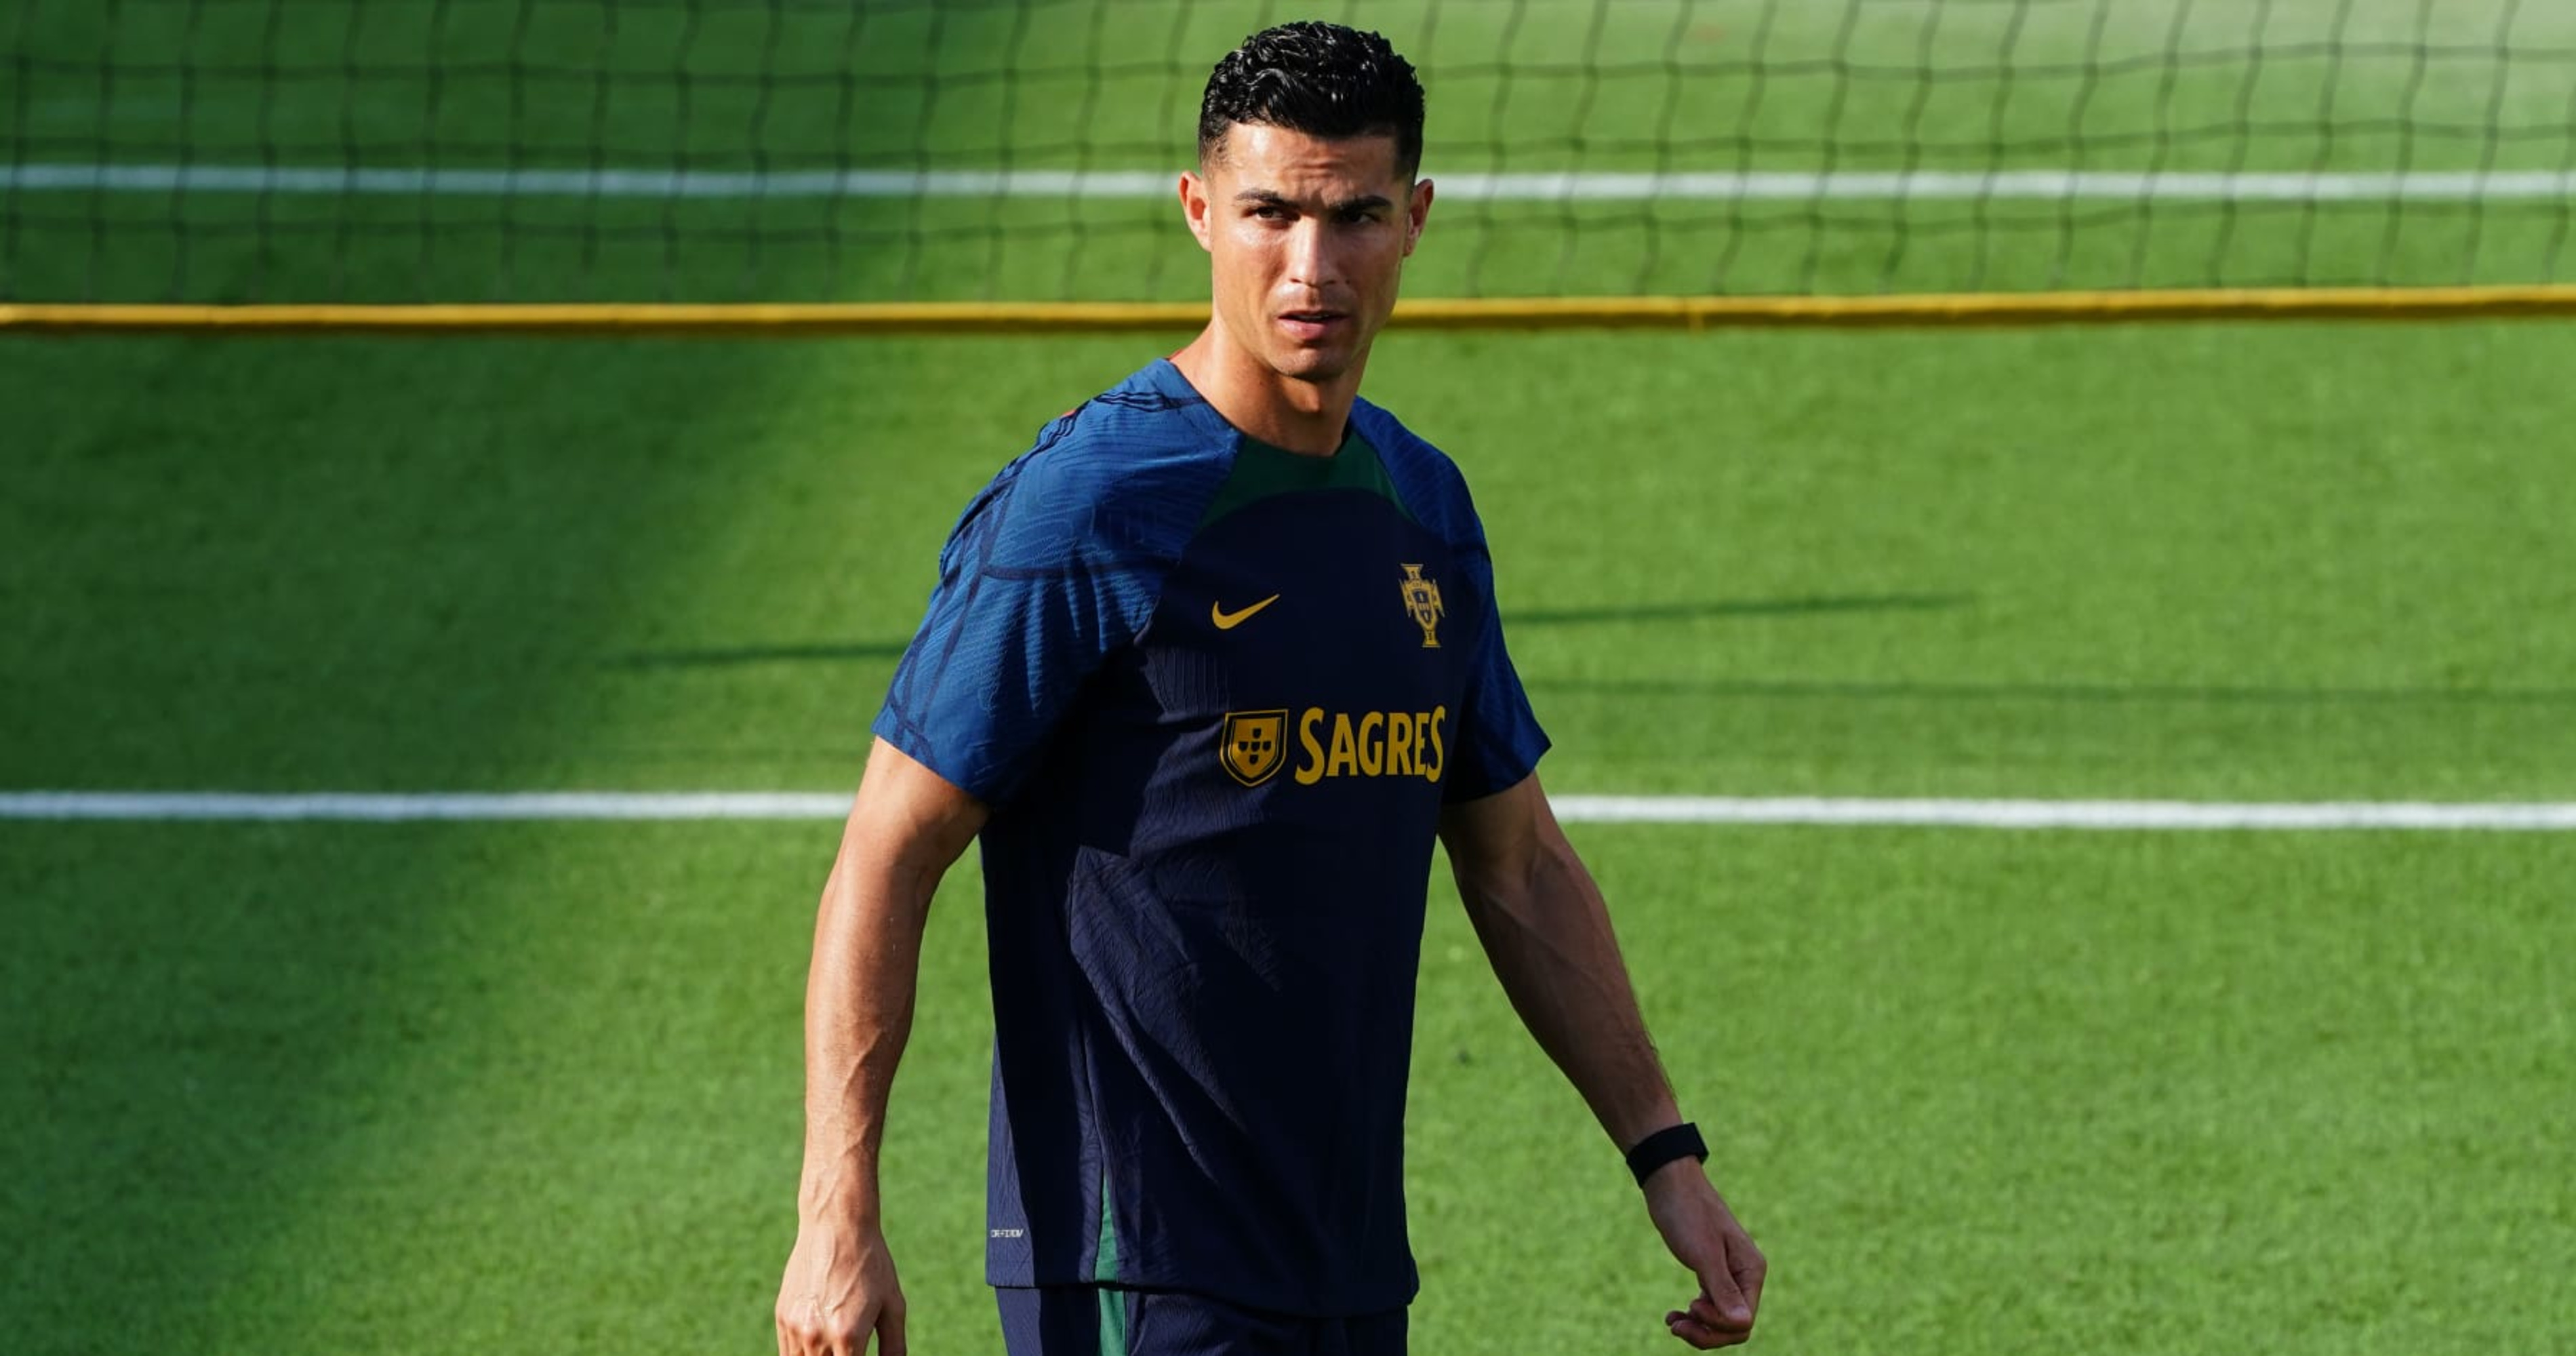 Is Cristiano Ronaldo retiring? Portugal World Cup elimination